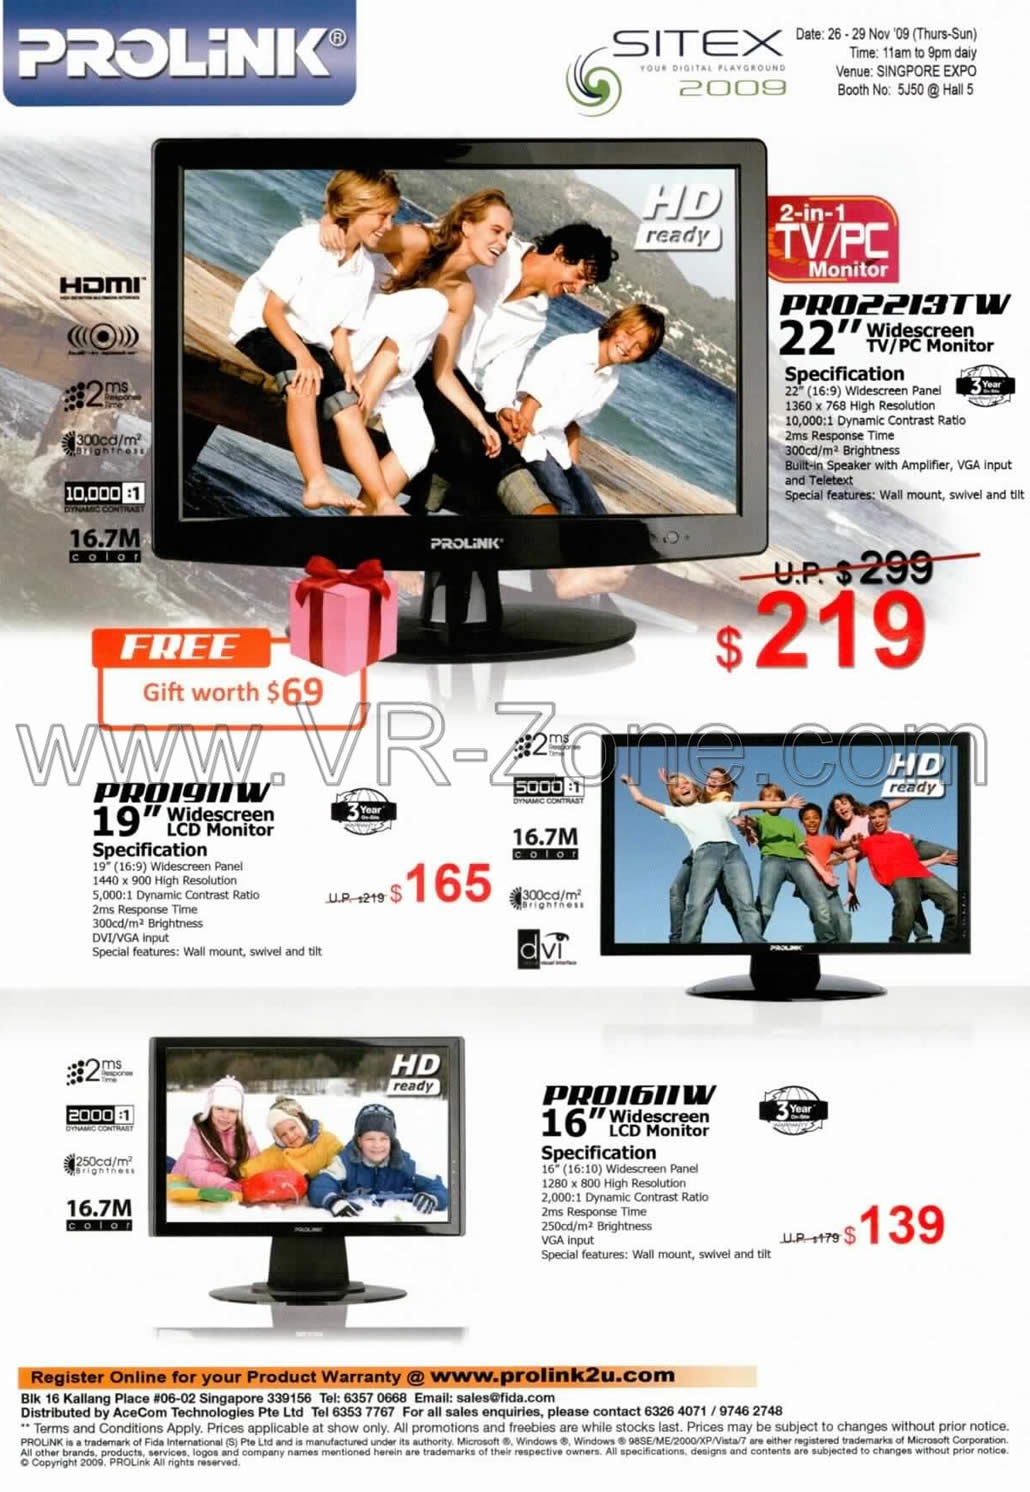 Sitex 2009 price list image brochure of Prolink LCD Monitor PRO 2213TW 1911W 1611W TV